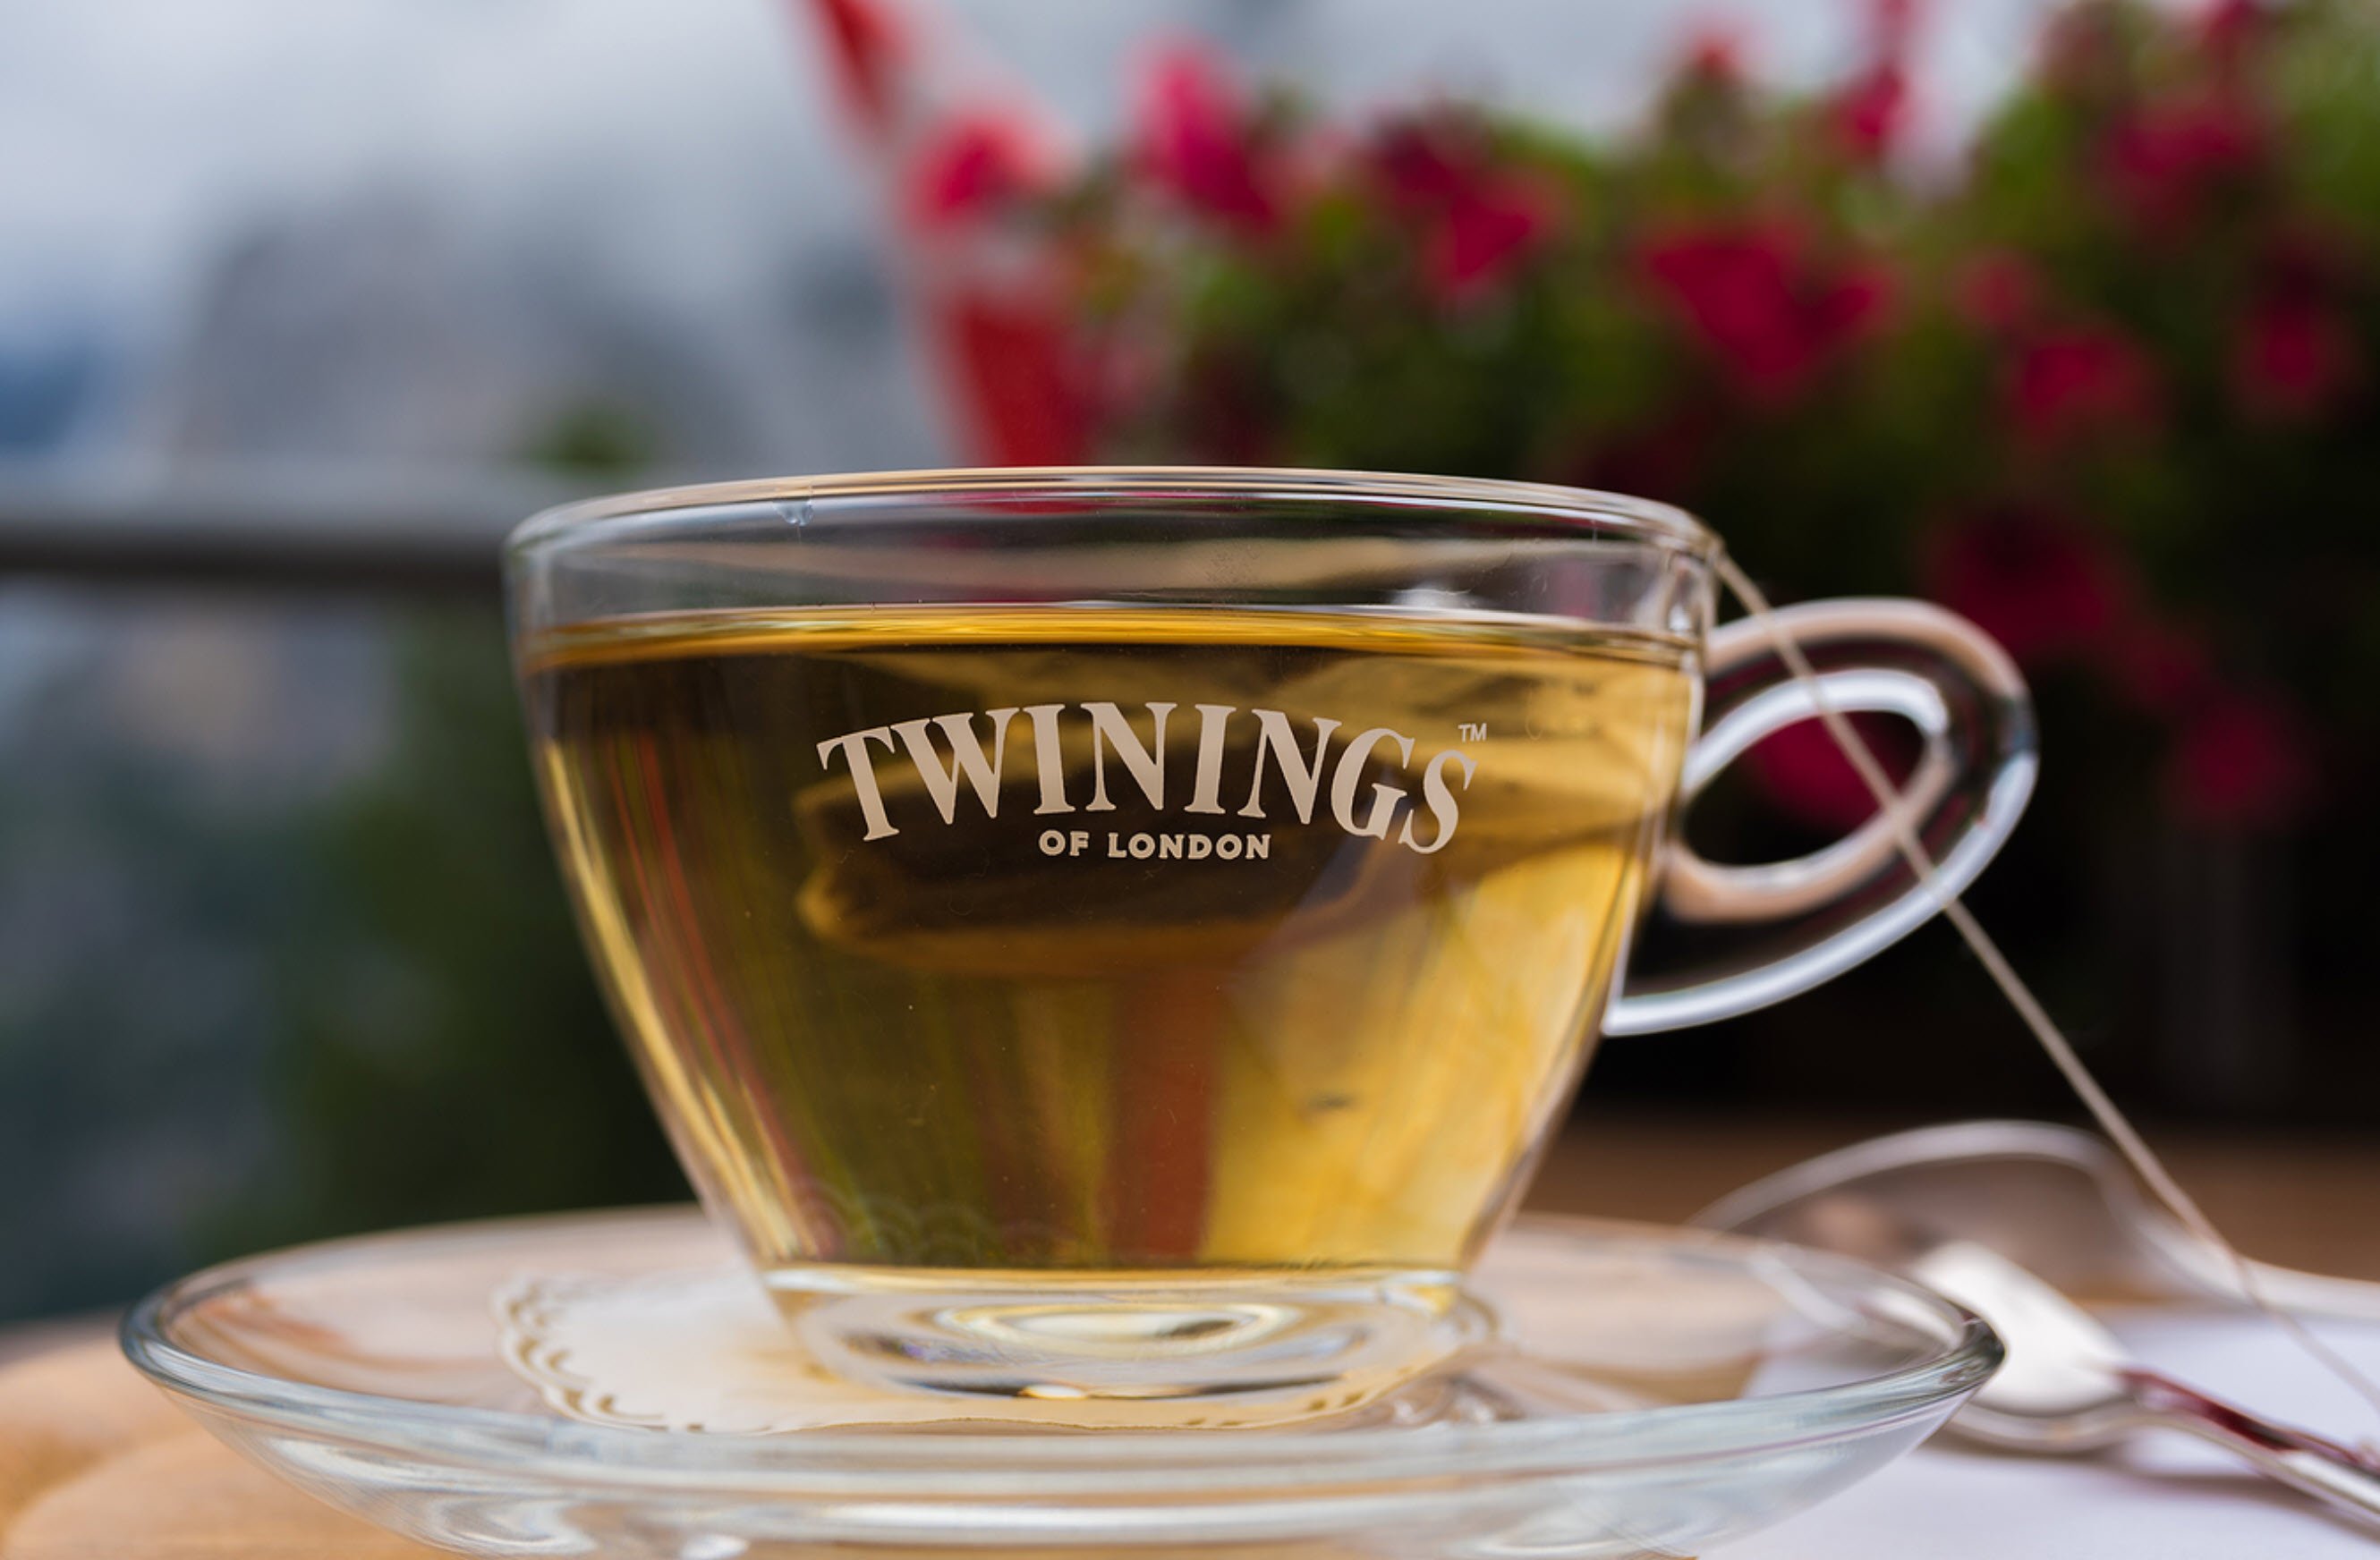 Twinings Tea - Global Luxury Tea Brands Report